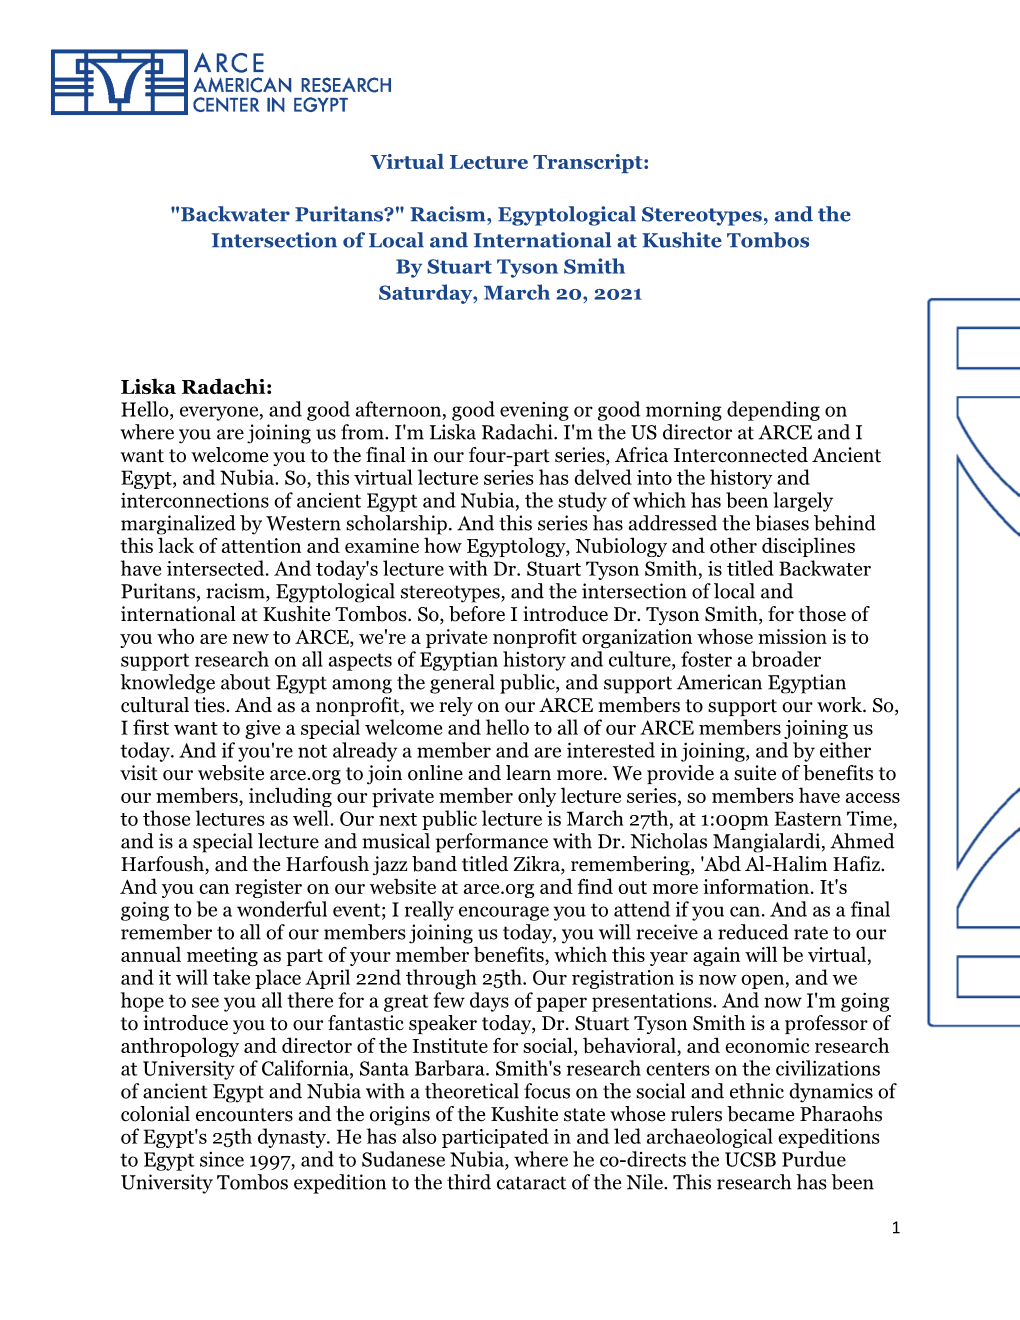 Virtual Lecture Transcript: "Backwater Puritans?" Racism, Egyptological